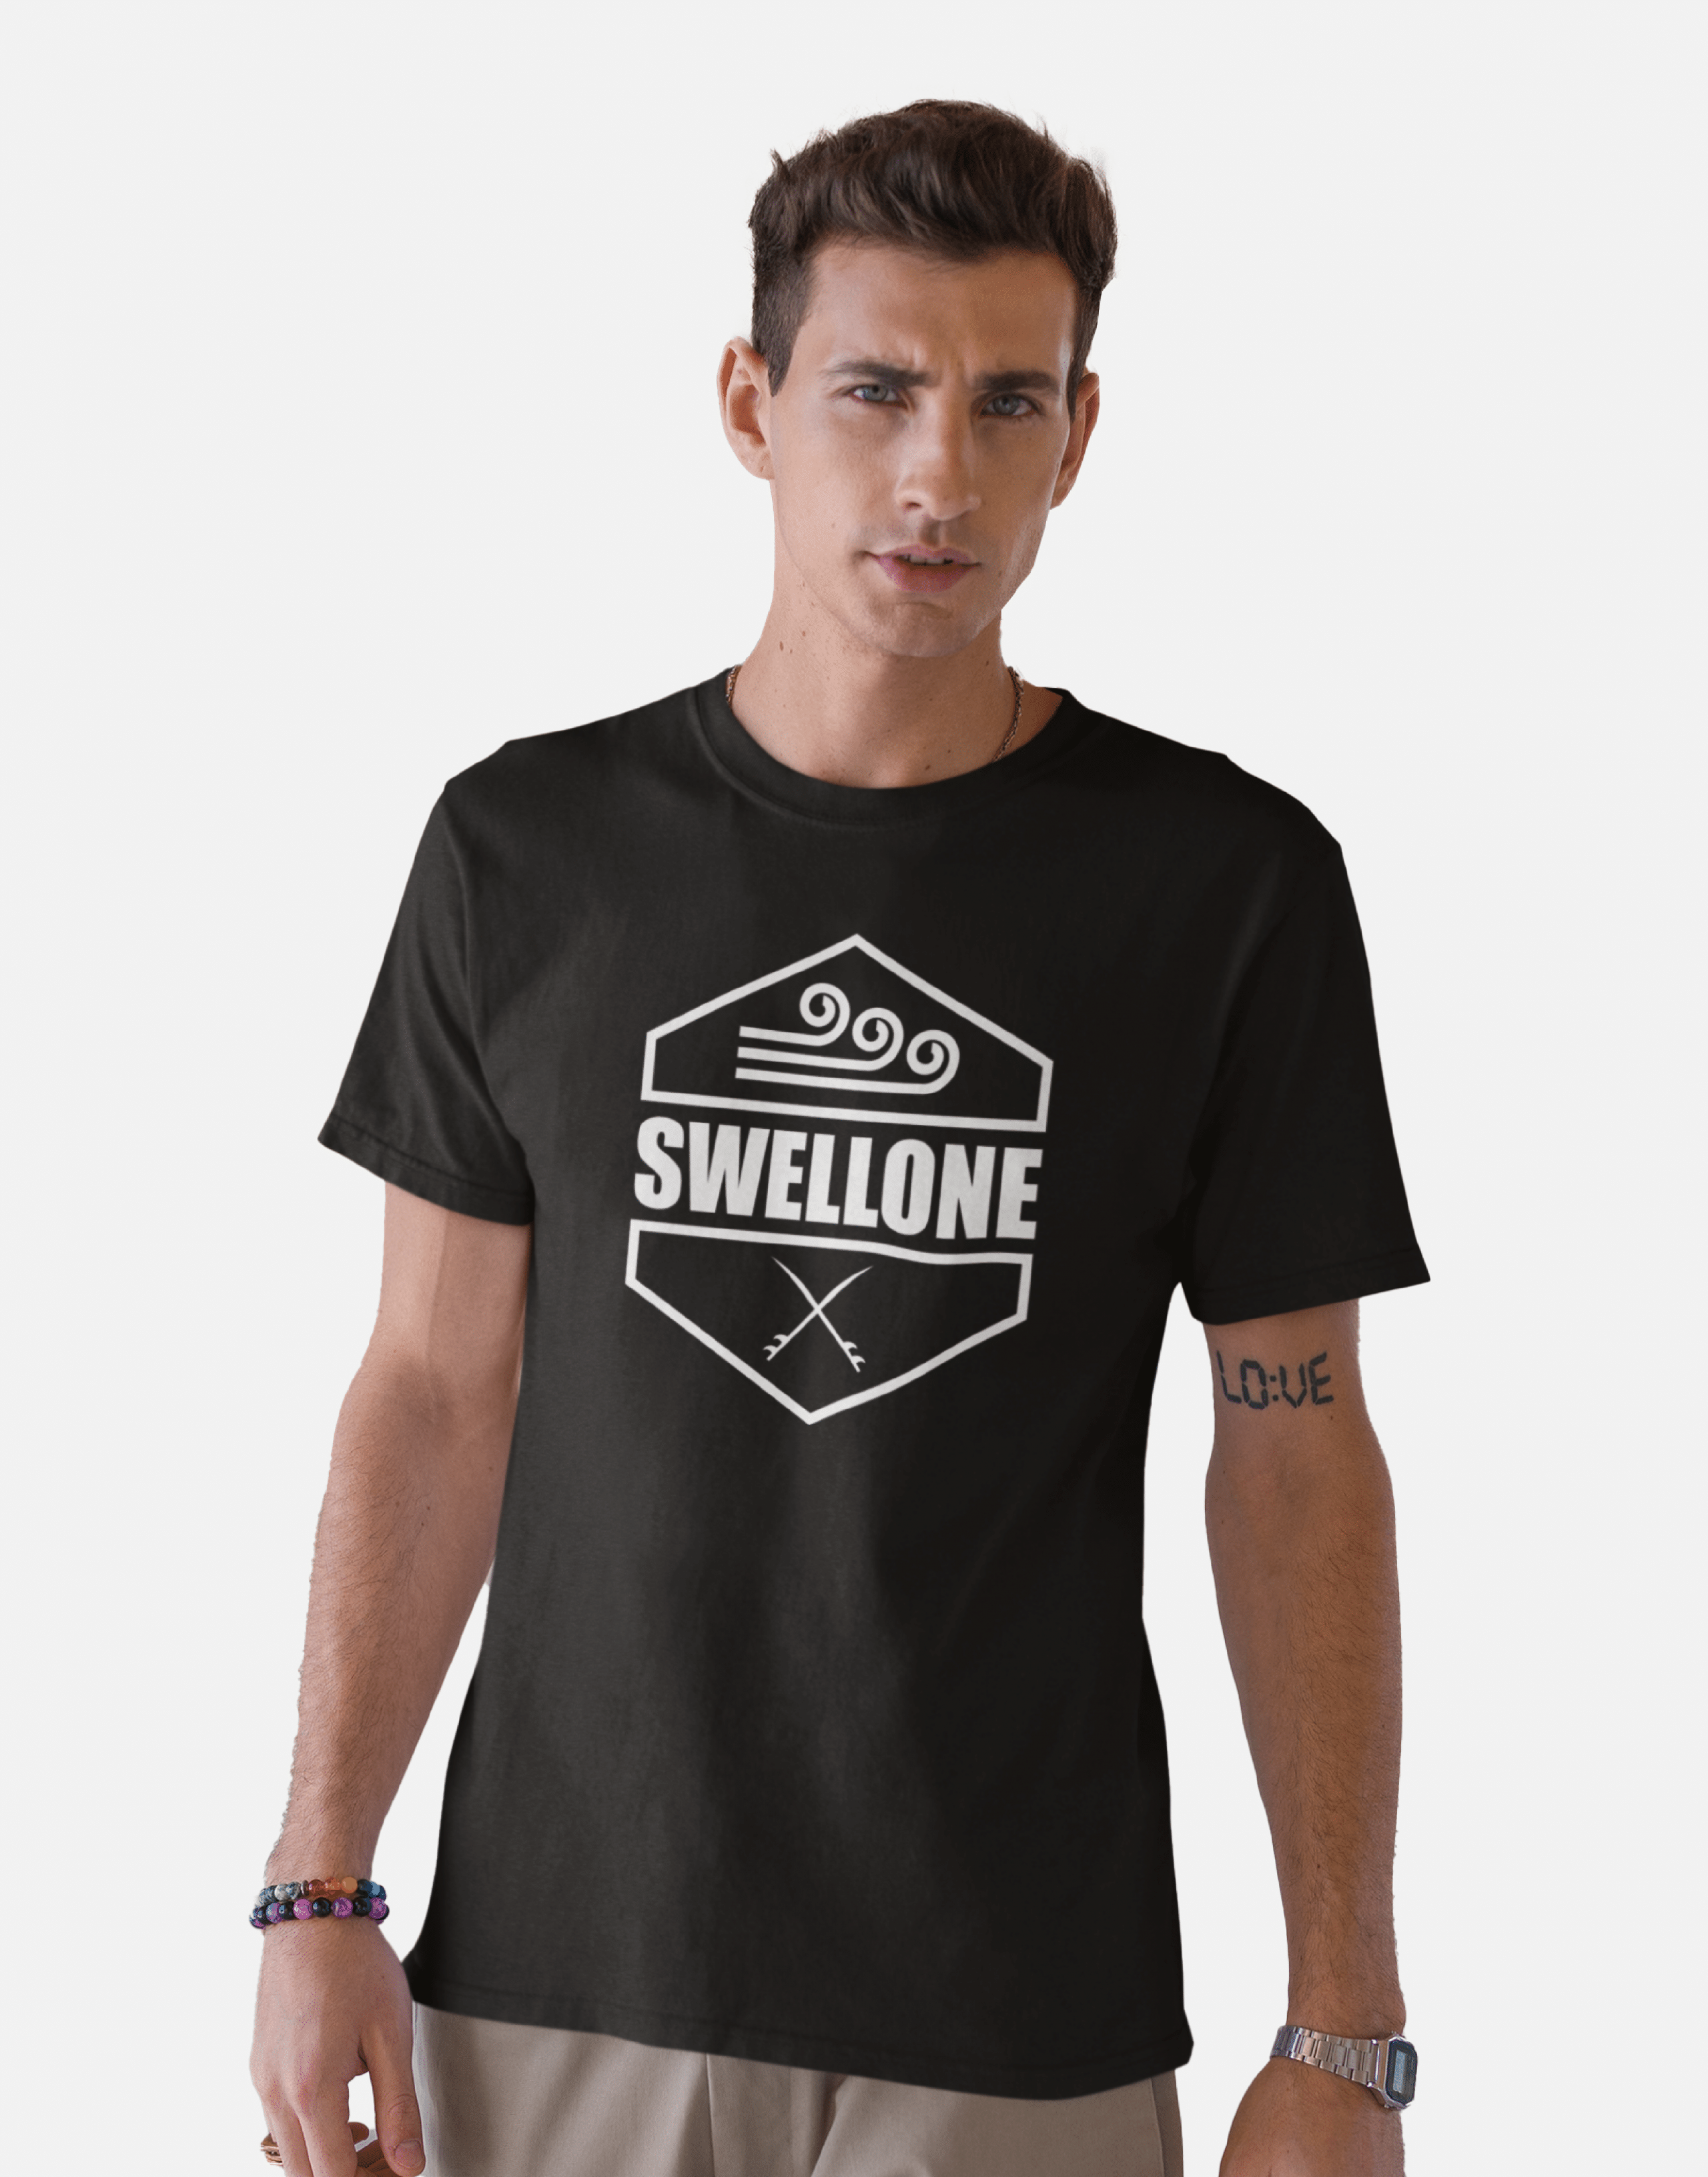 Man wearing a black Swellone tshirt with Swellone diamond logo.